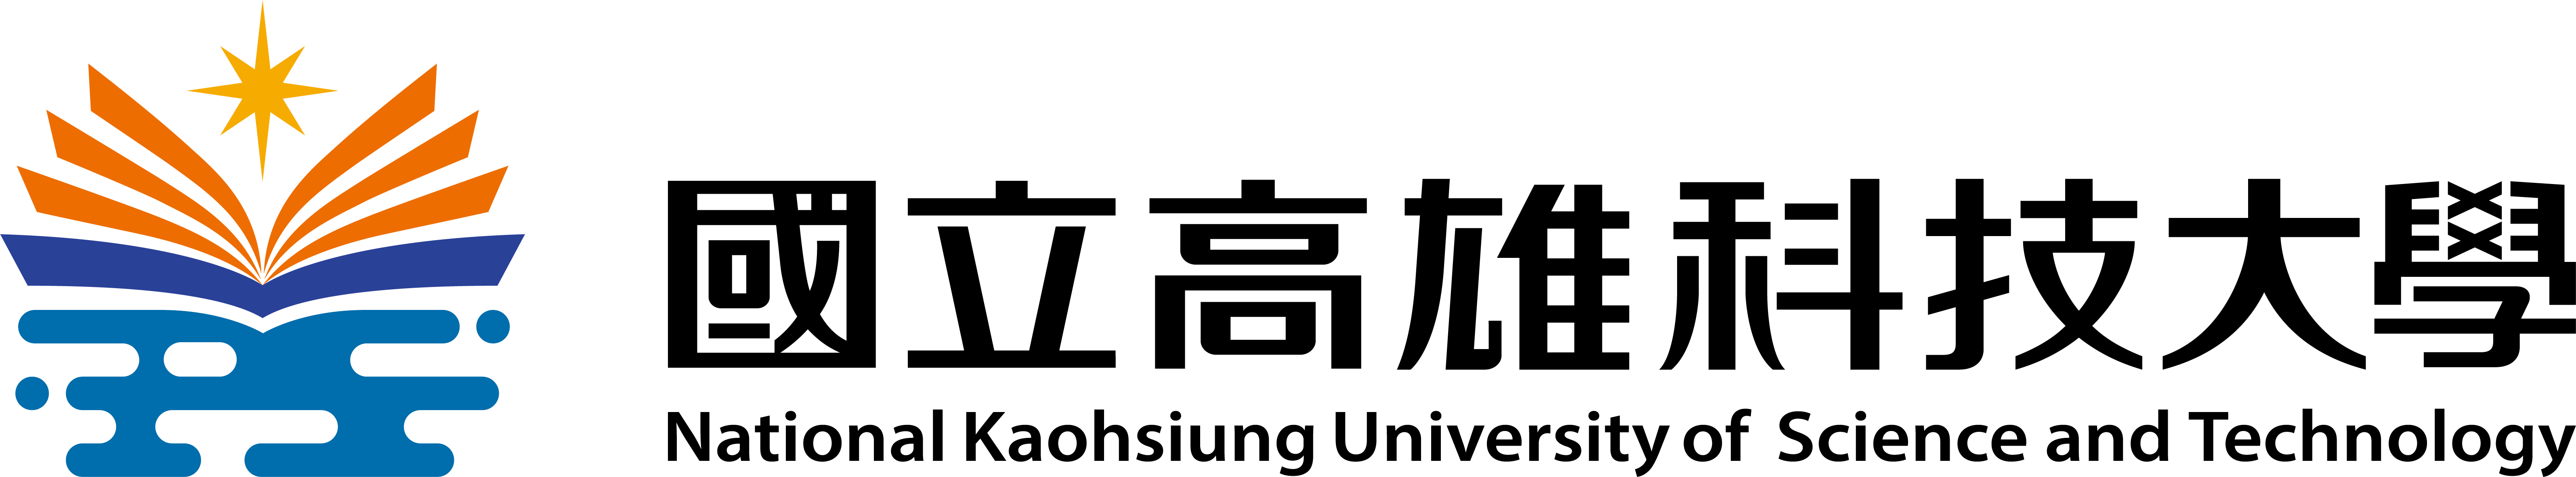 NKUST logo